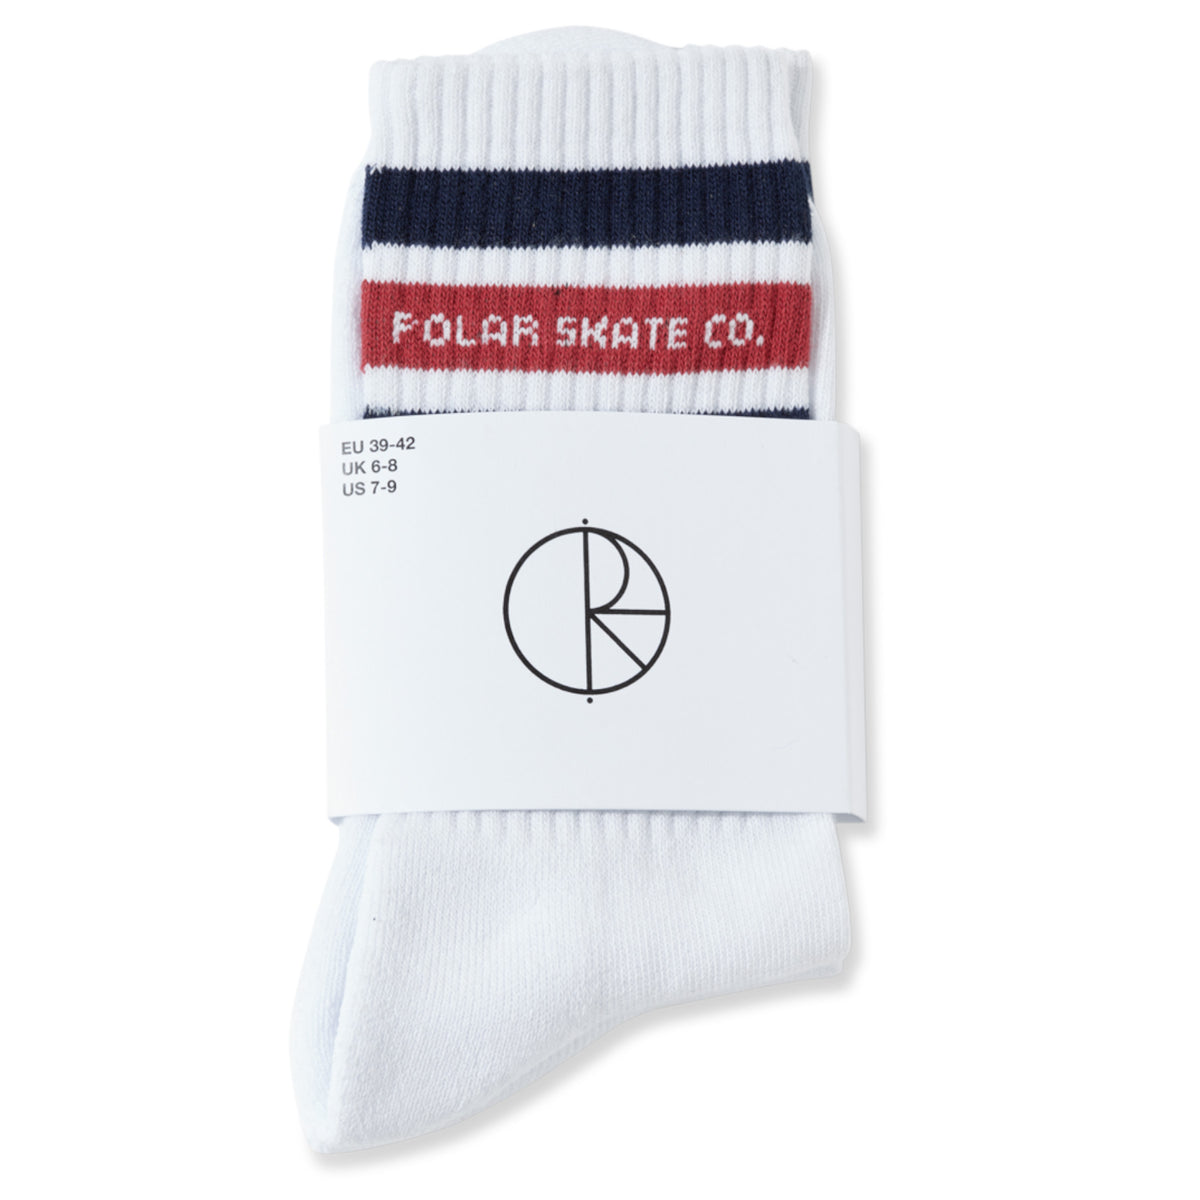 Polar Fat Stripe Socks White / Navy / Red